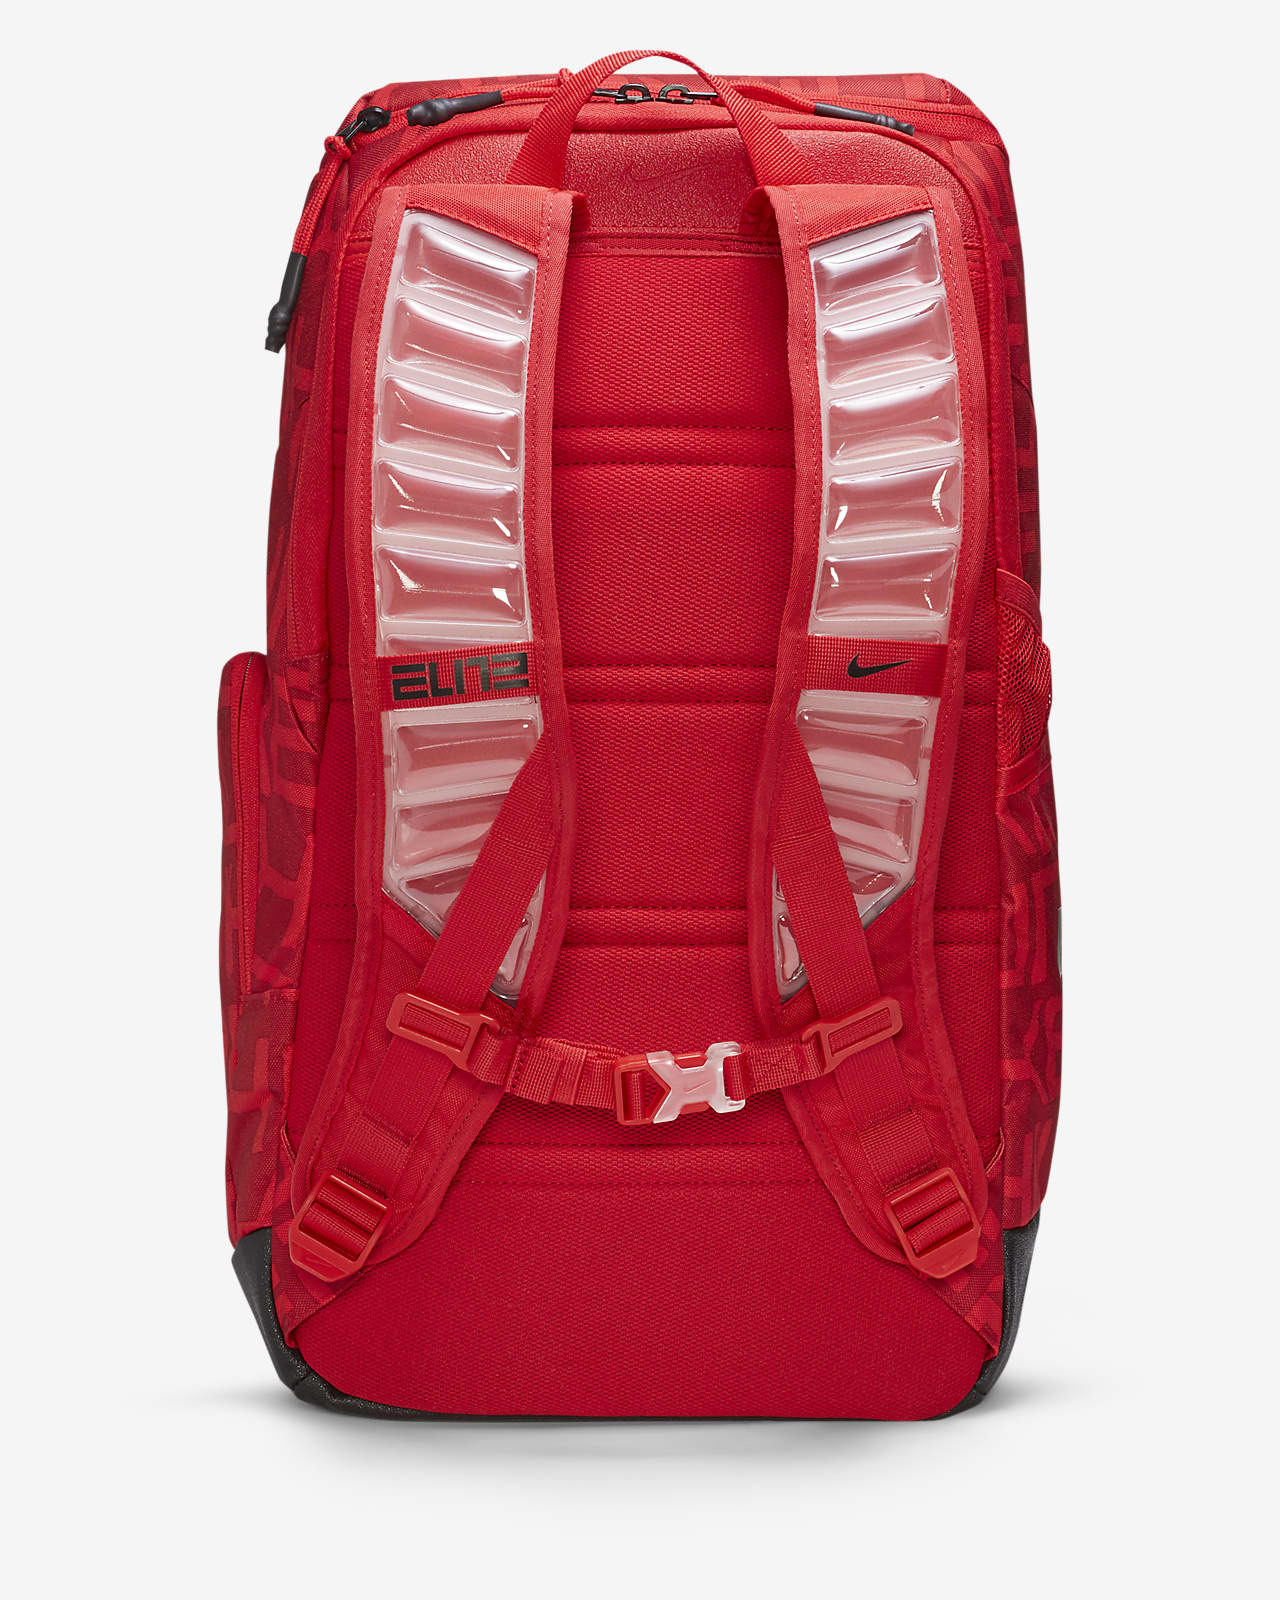 nike elite pro backpack sale